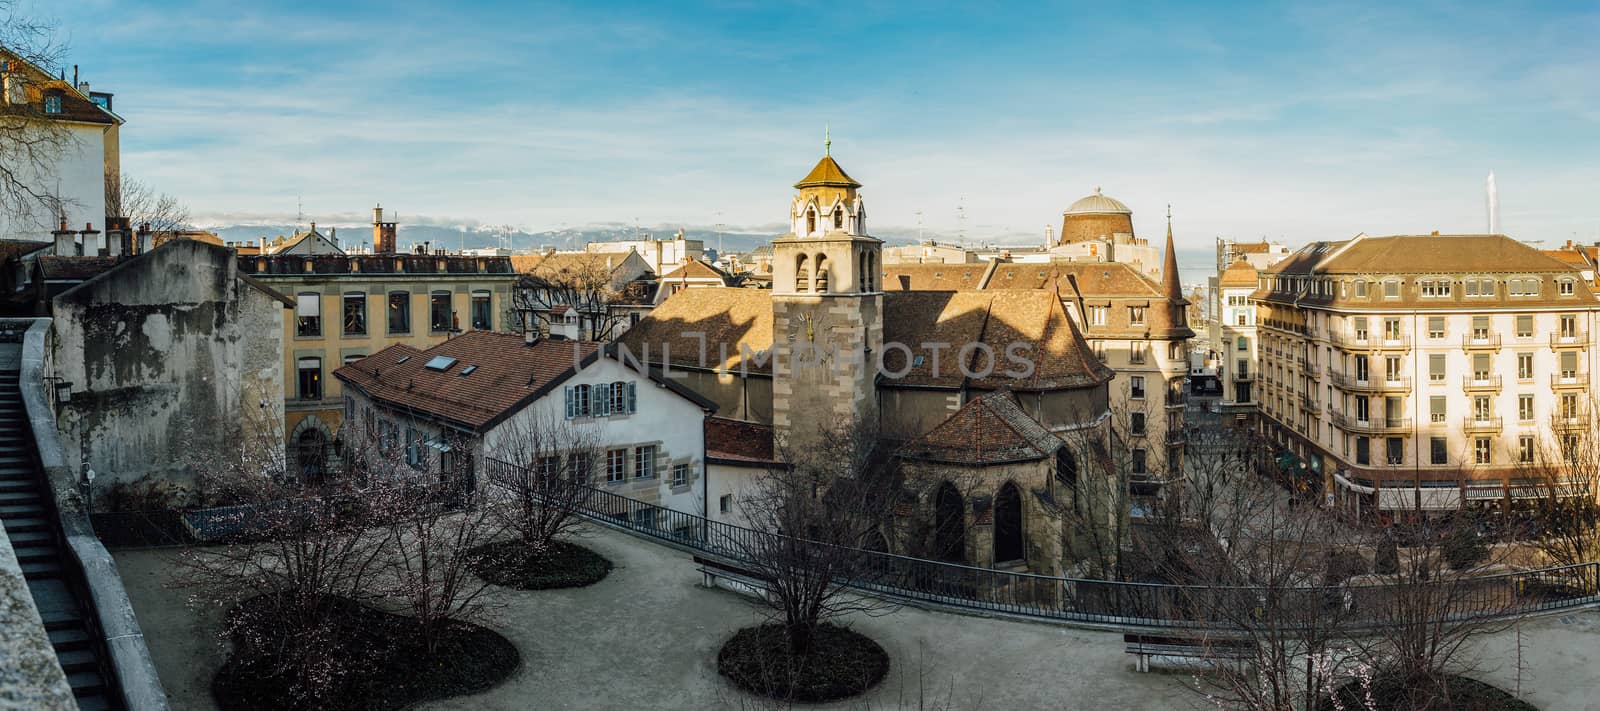 Geneva old town panoramic by FCerez